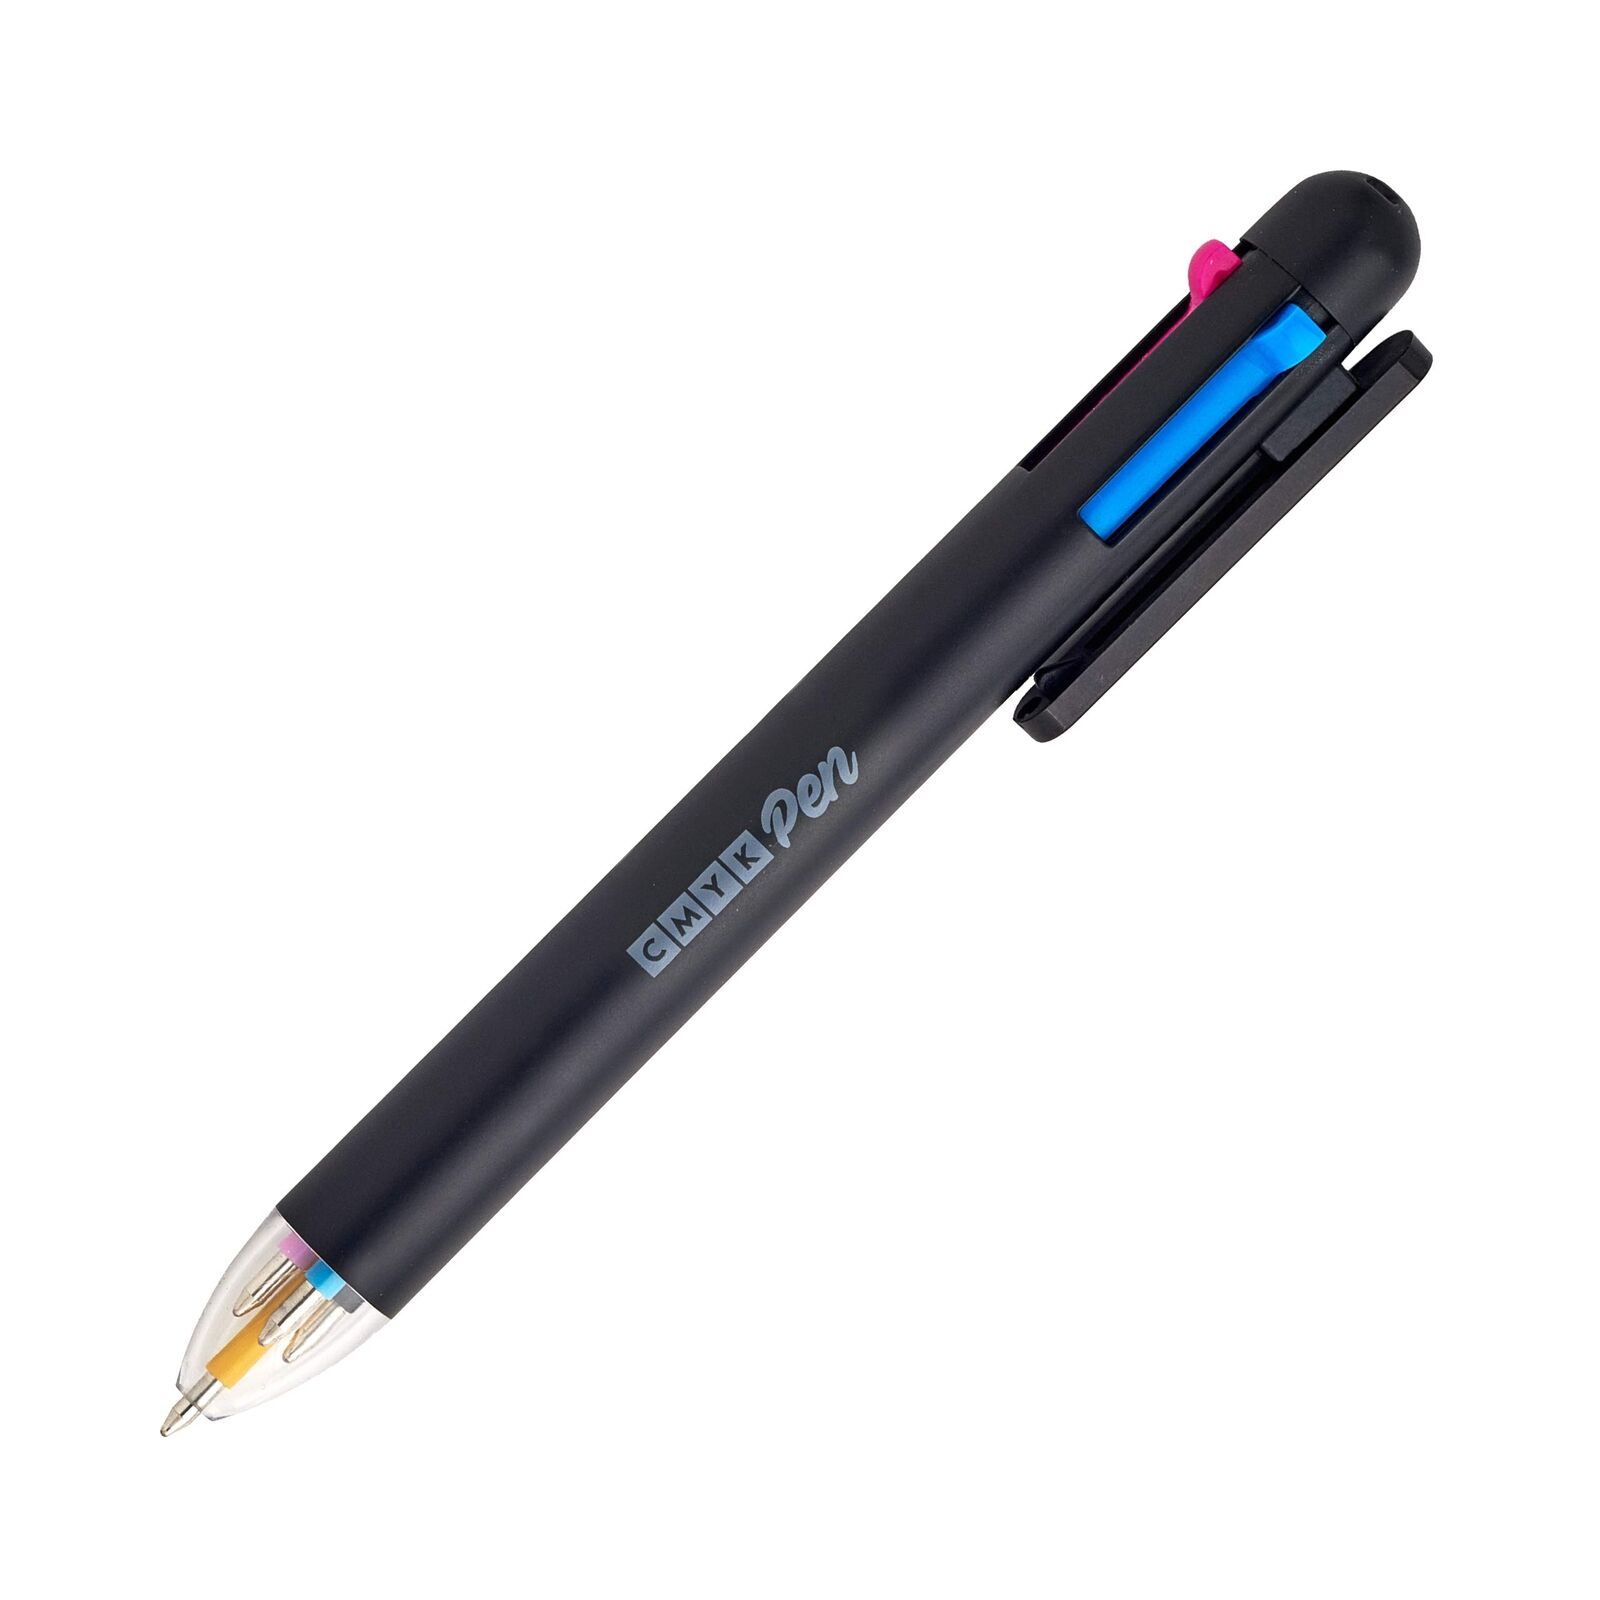 SUCK UK CMYK Multi Color Pen | Ballpoint Pen & Multicolor Pen In One | Retrac...